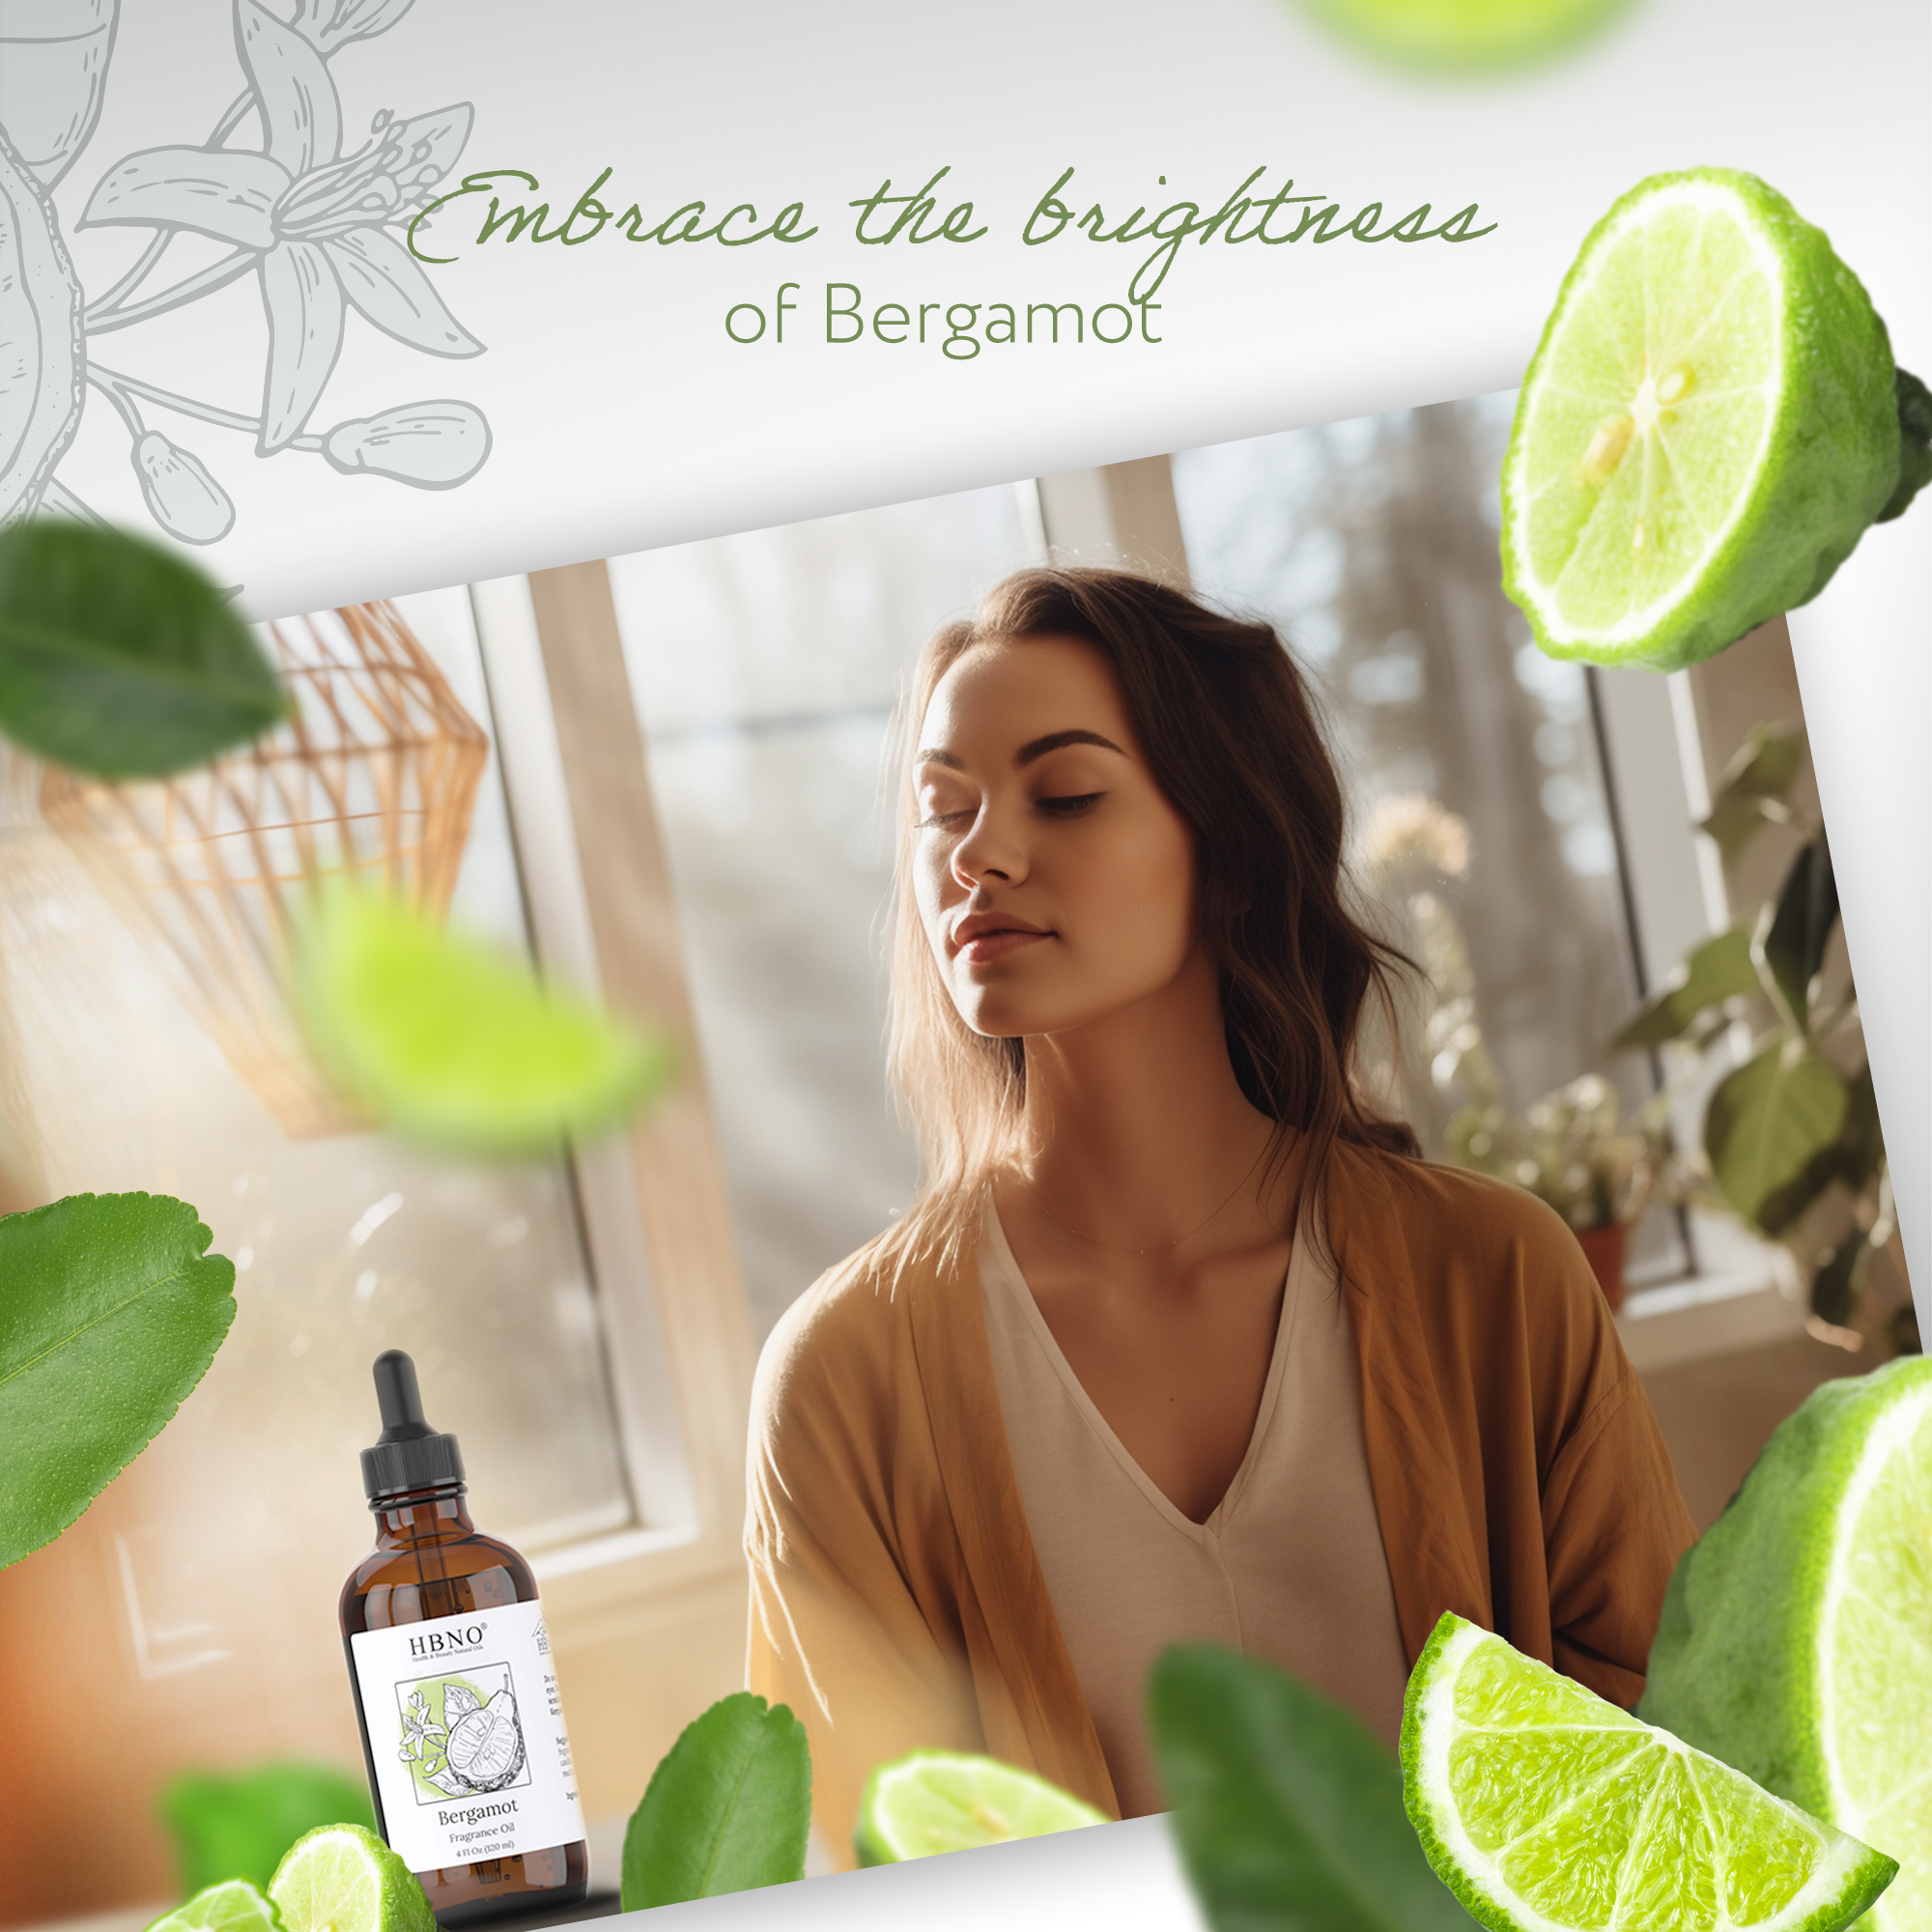 Bergamot Fragrance